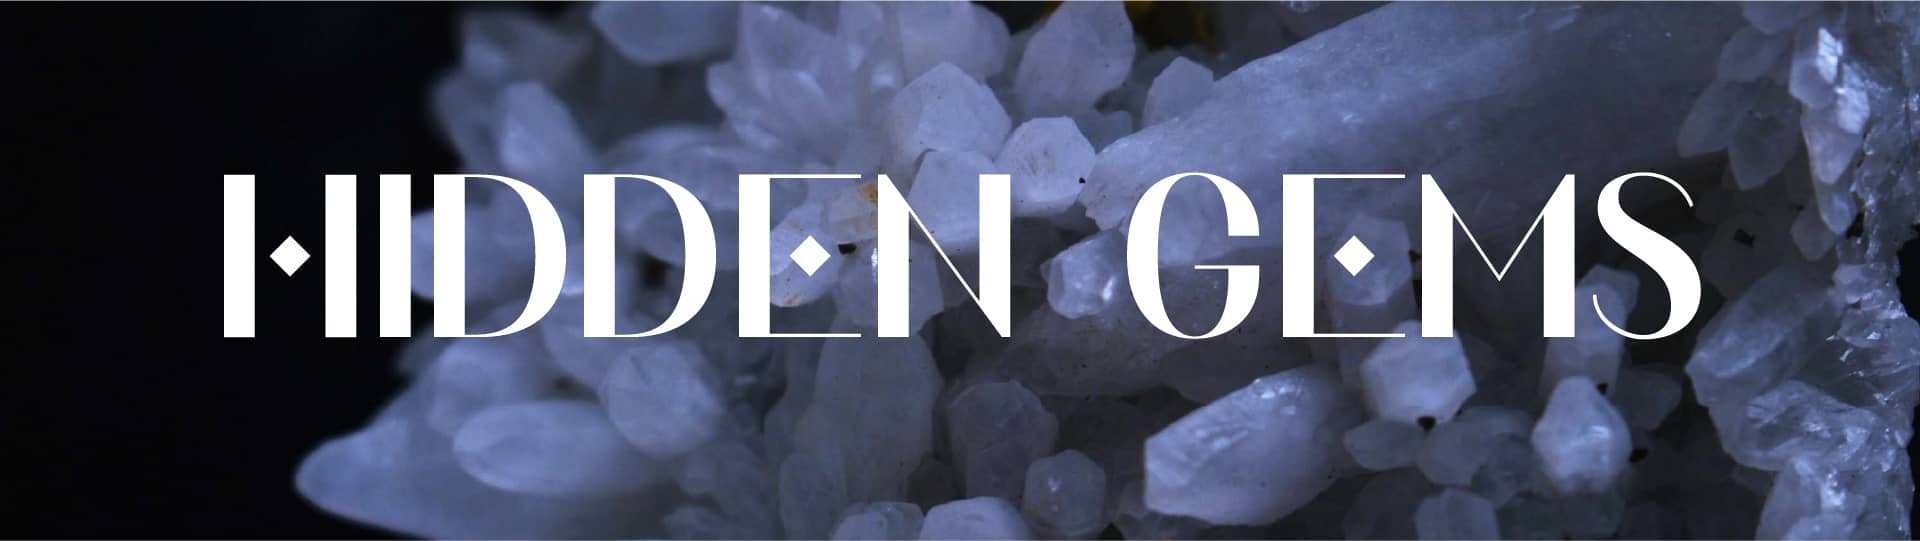 Hidden Gems text over crystal background